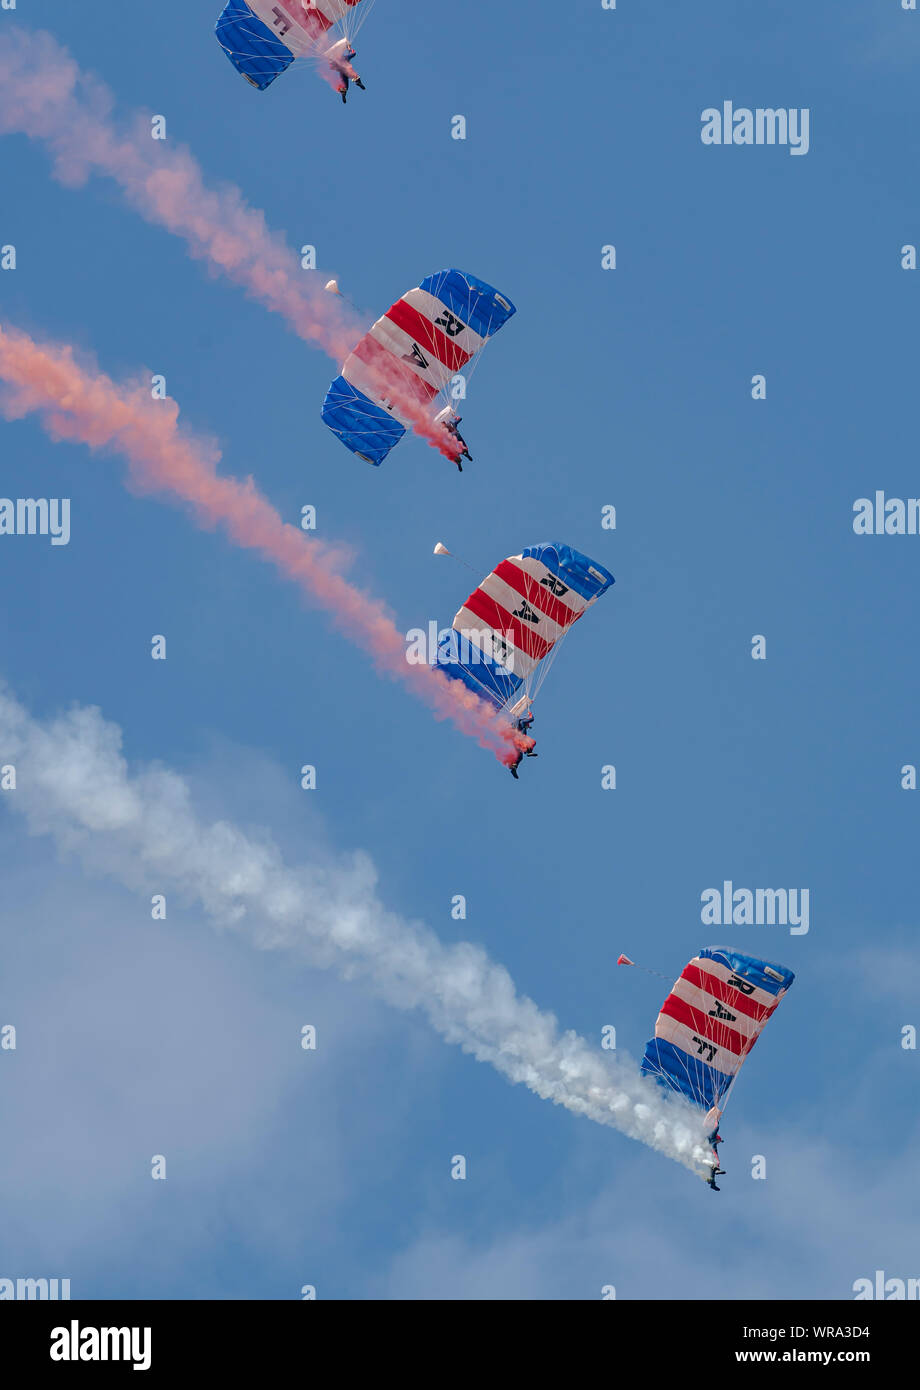 RAF Falcons parachute display team Stock Photo